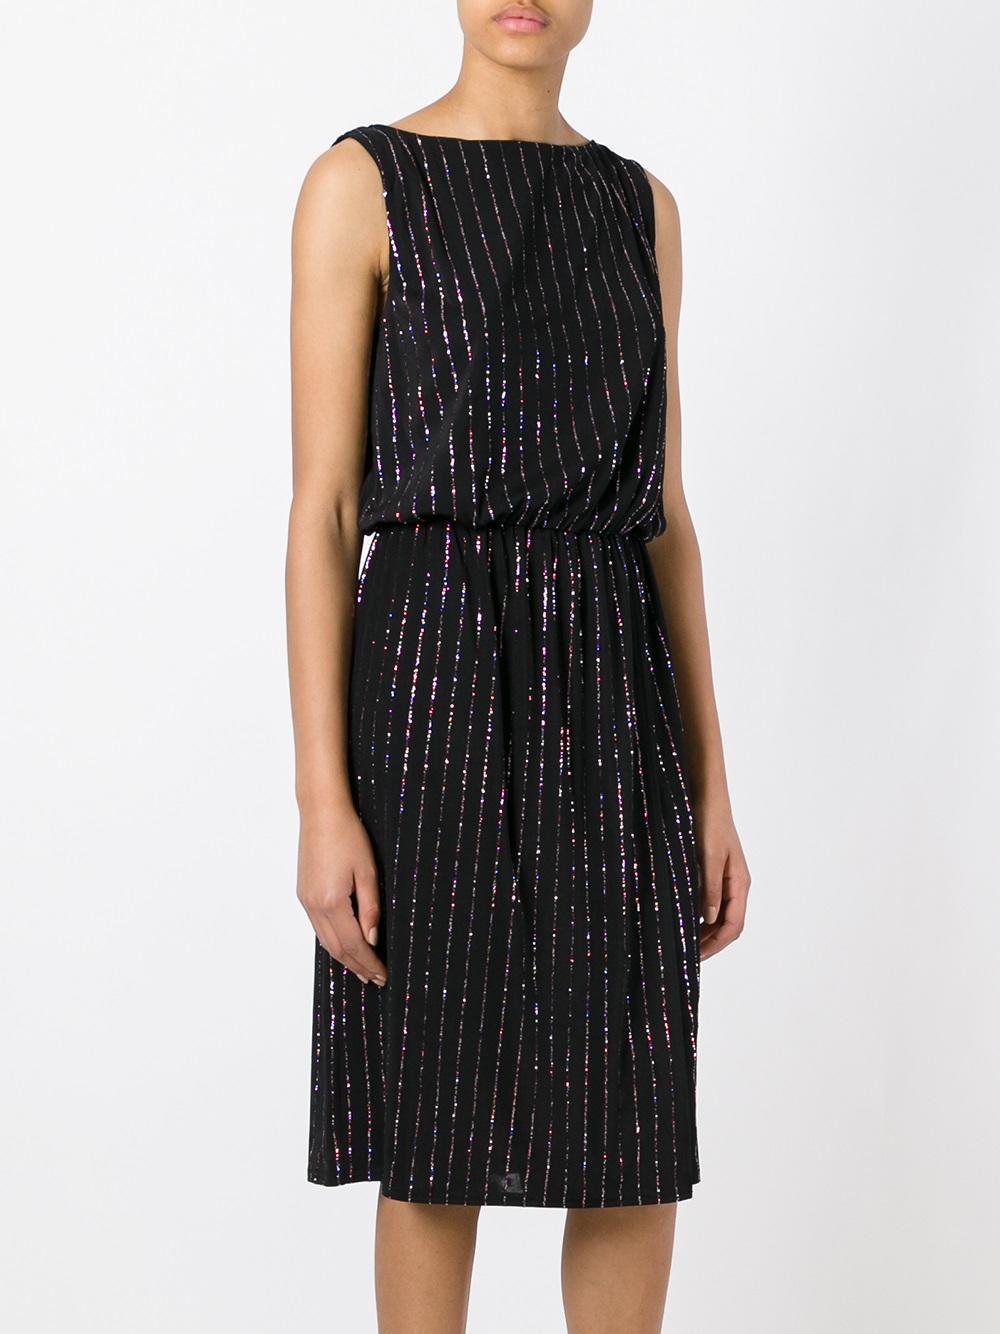 Lyst - Marc Jacobs Glitter Pinstripe Dress in Black